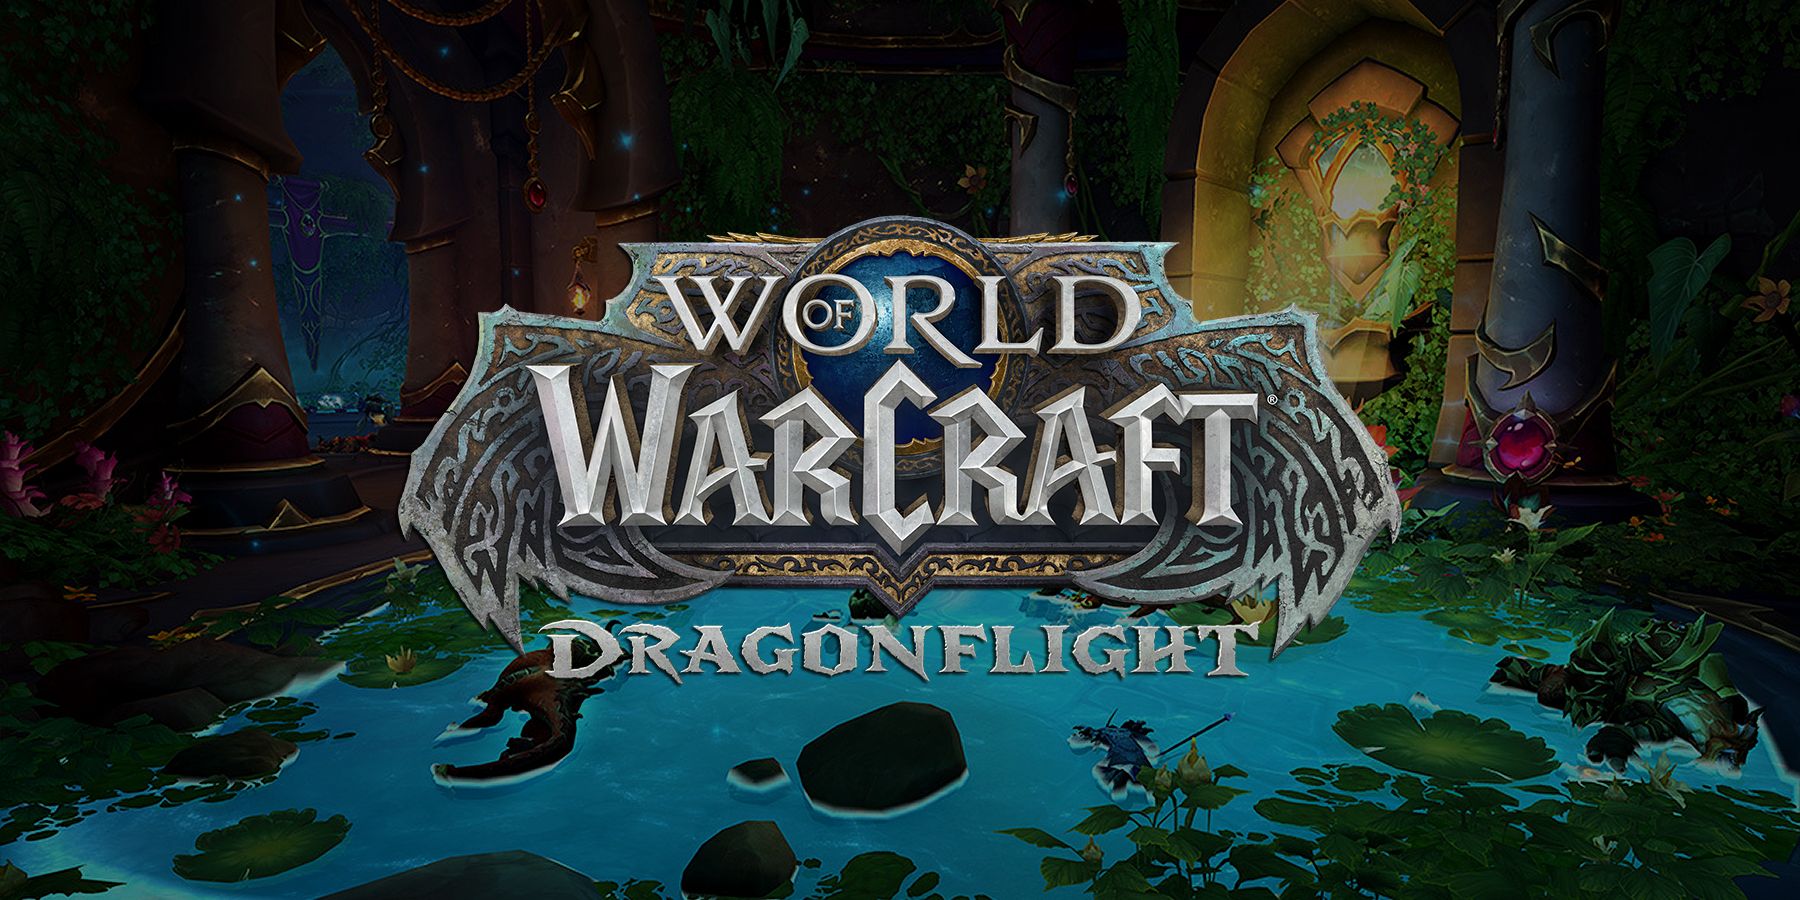 dungeons dragonflight adventure awaits wow world of warcraft featured